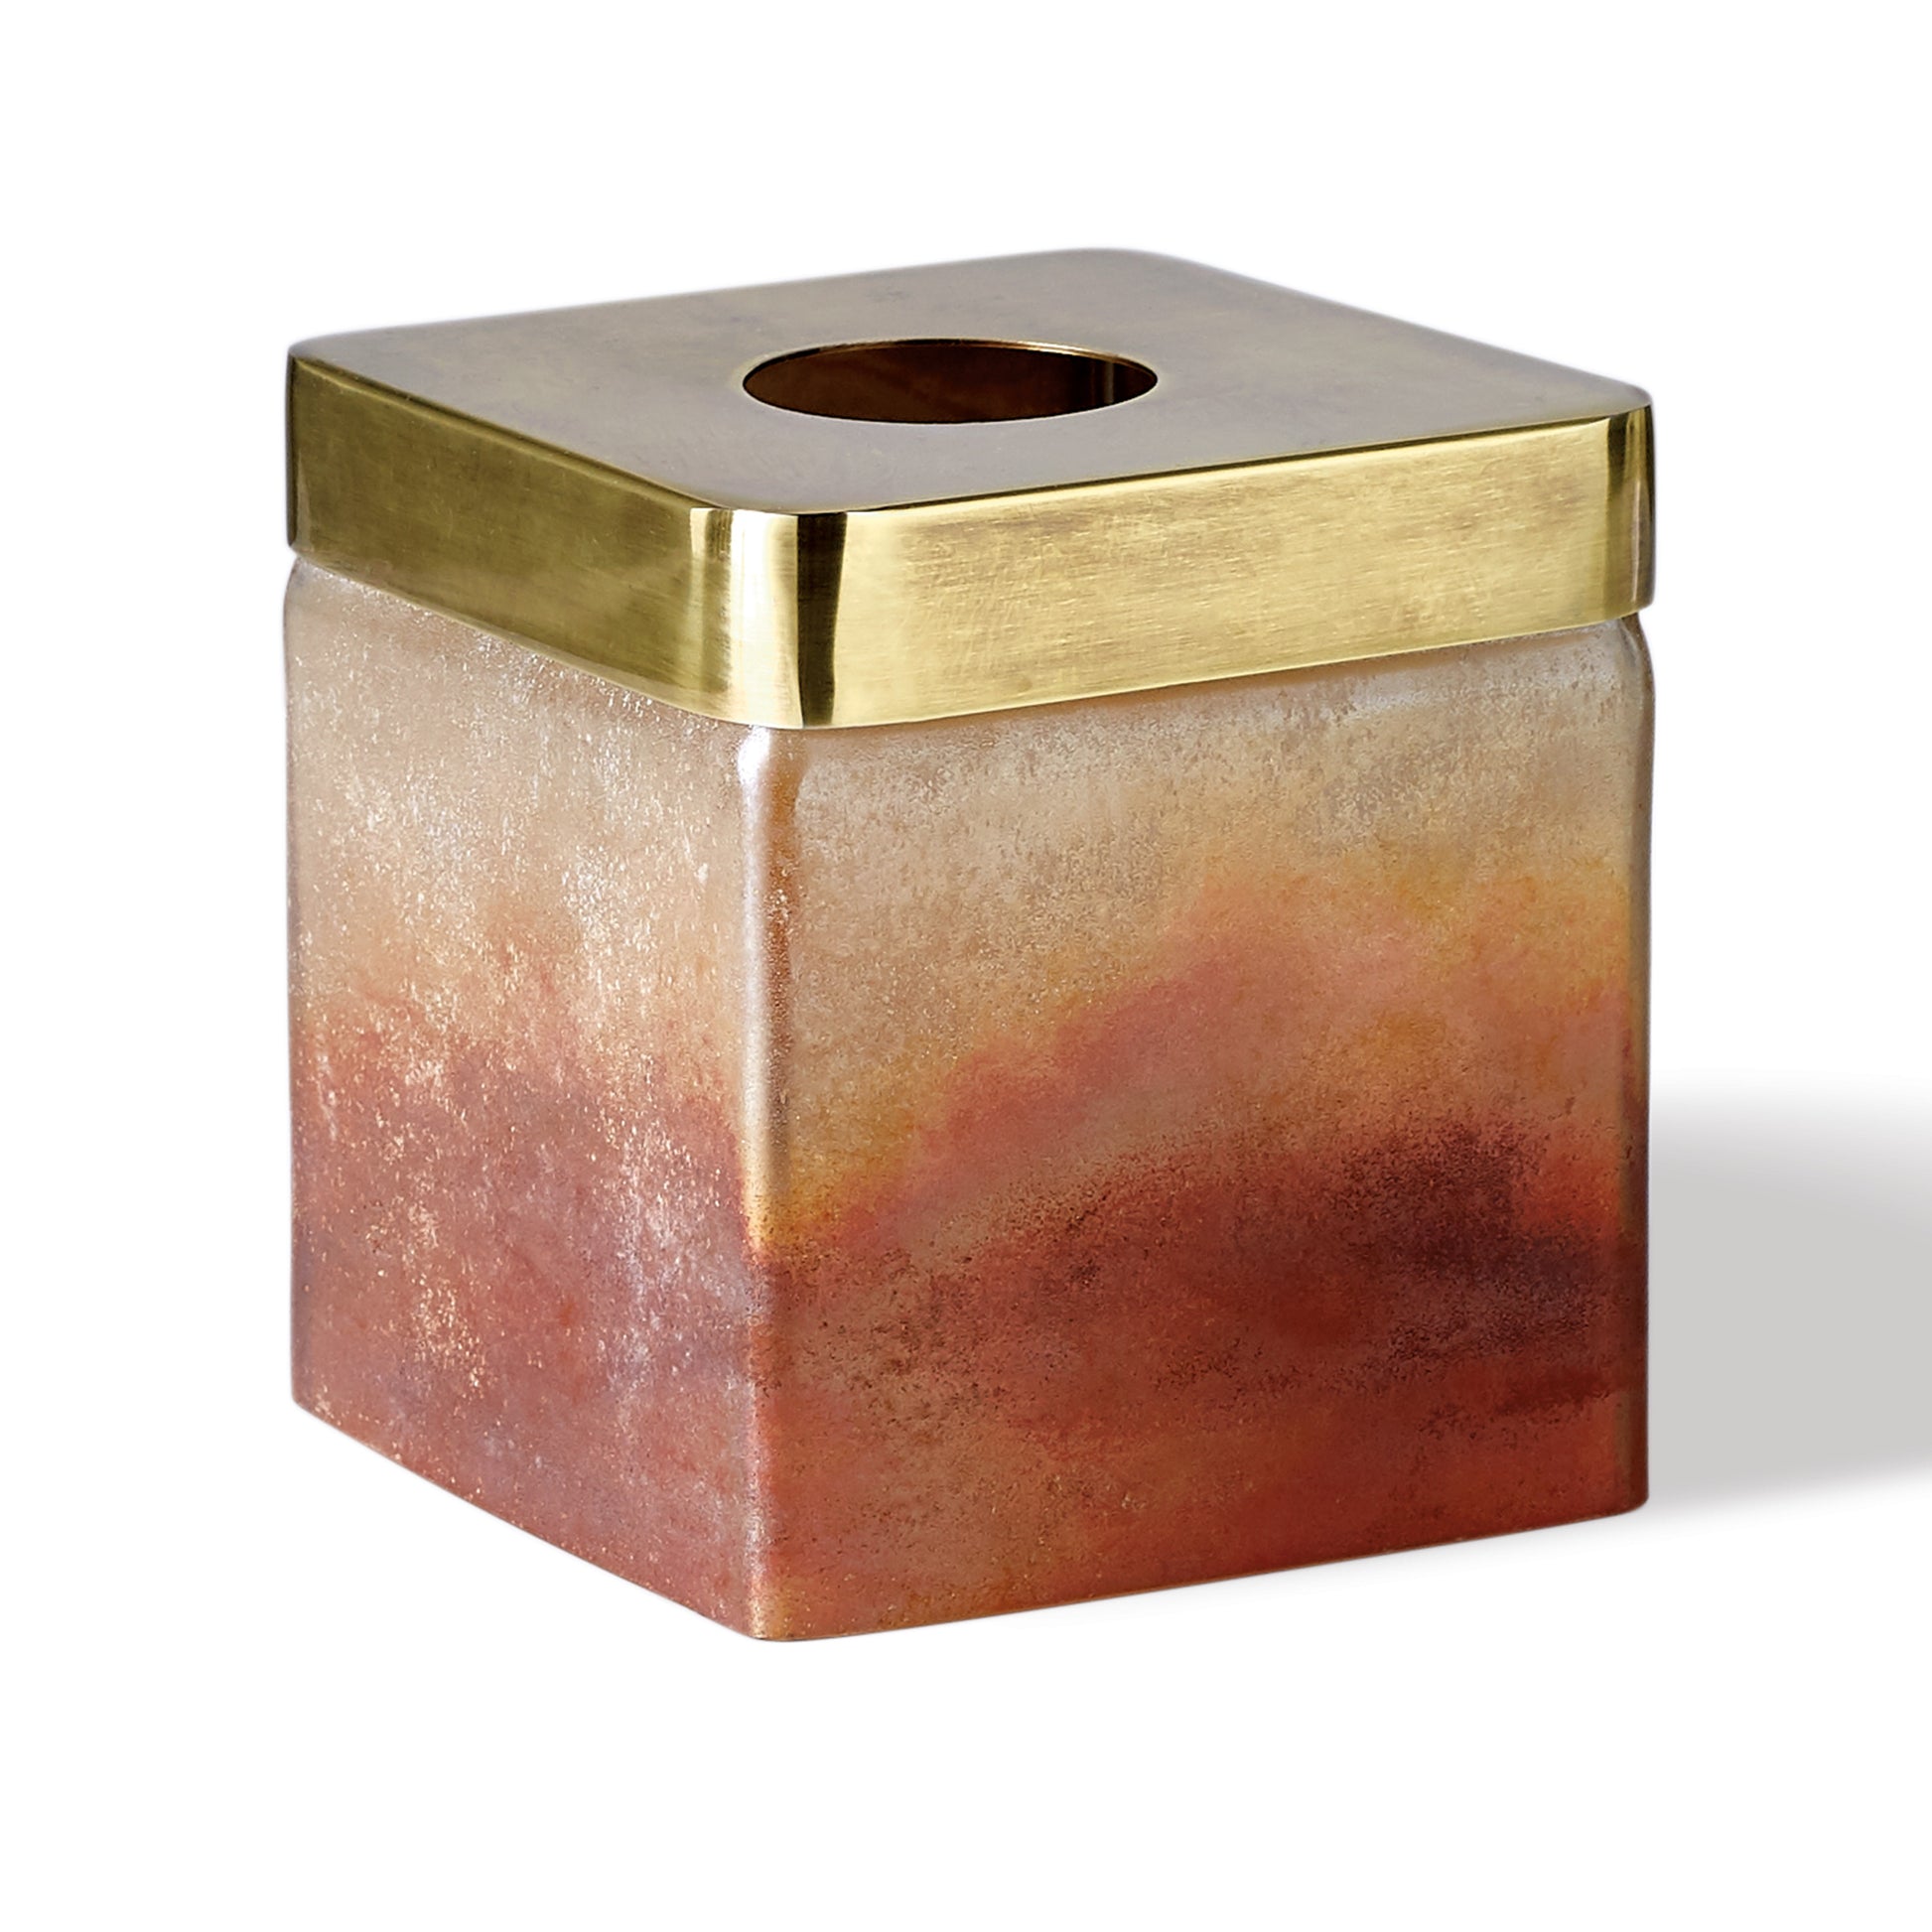 Michael Aram Torched Bath Accessories tissue box cover